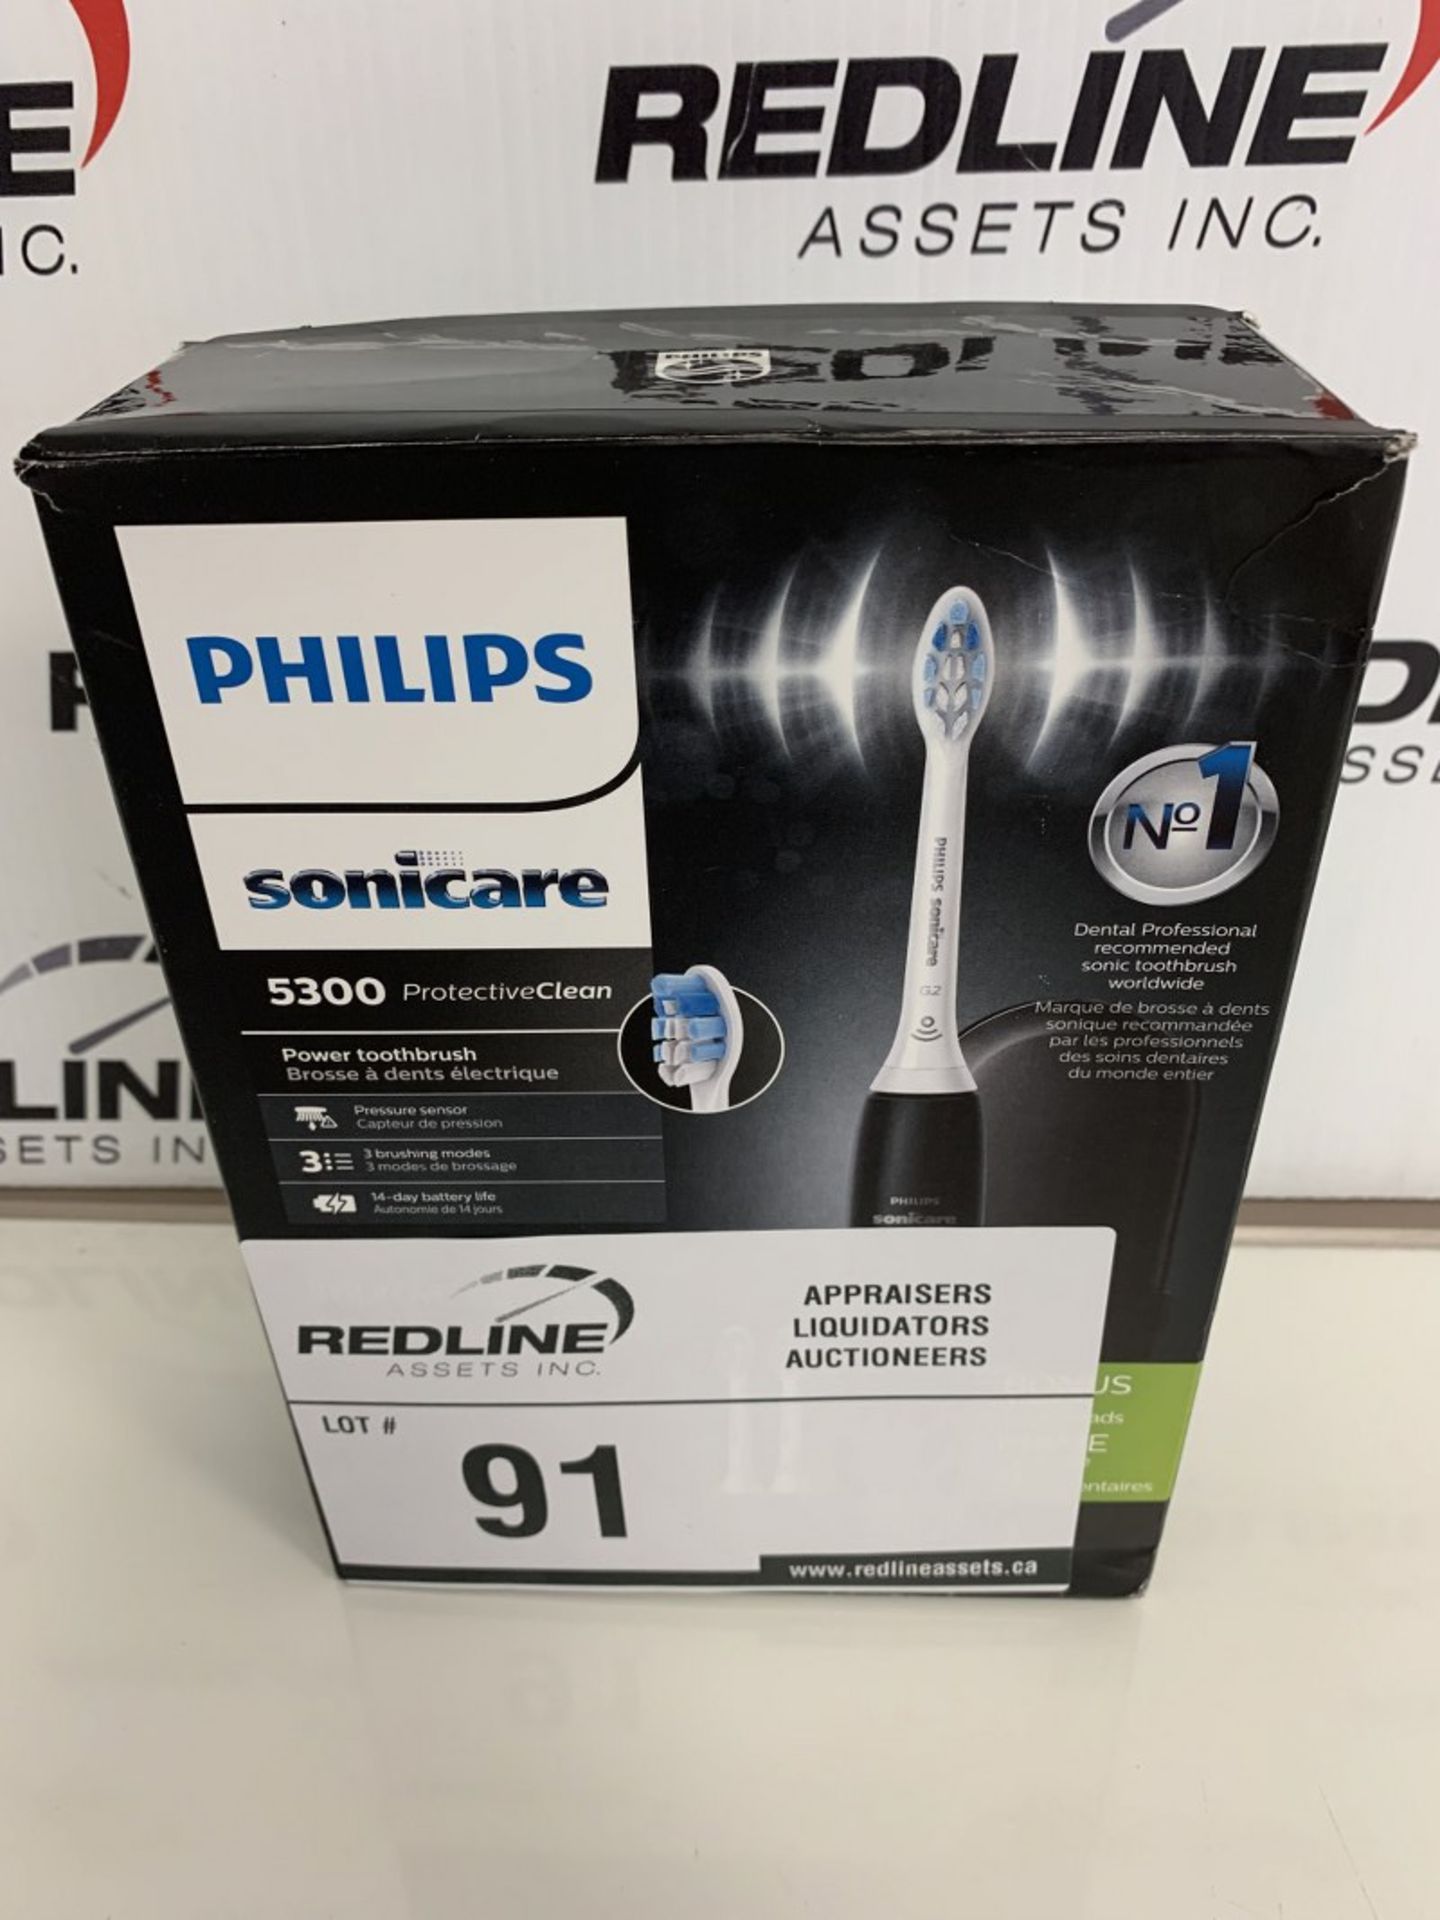 Phillips - Sonicare 5300 - Power Toothbrush